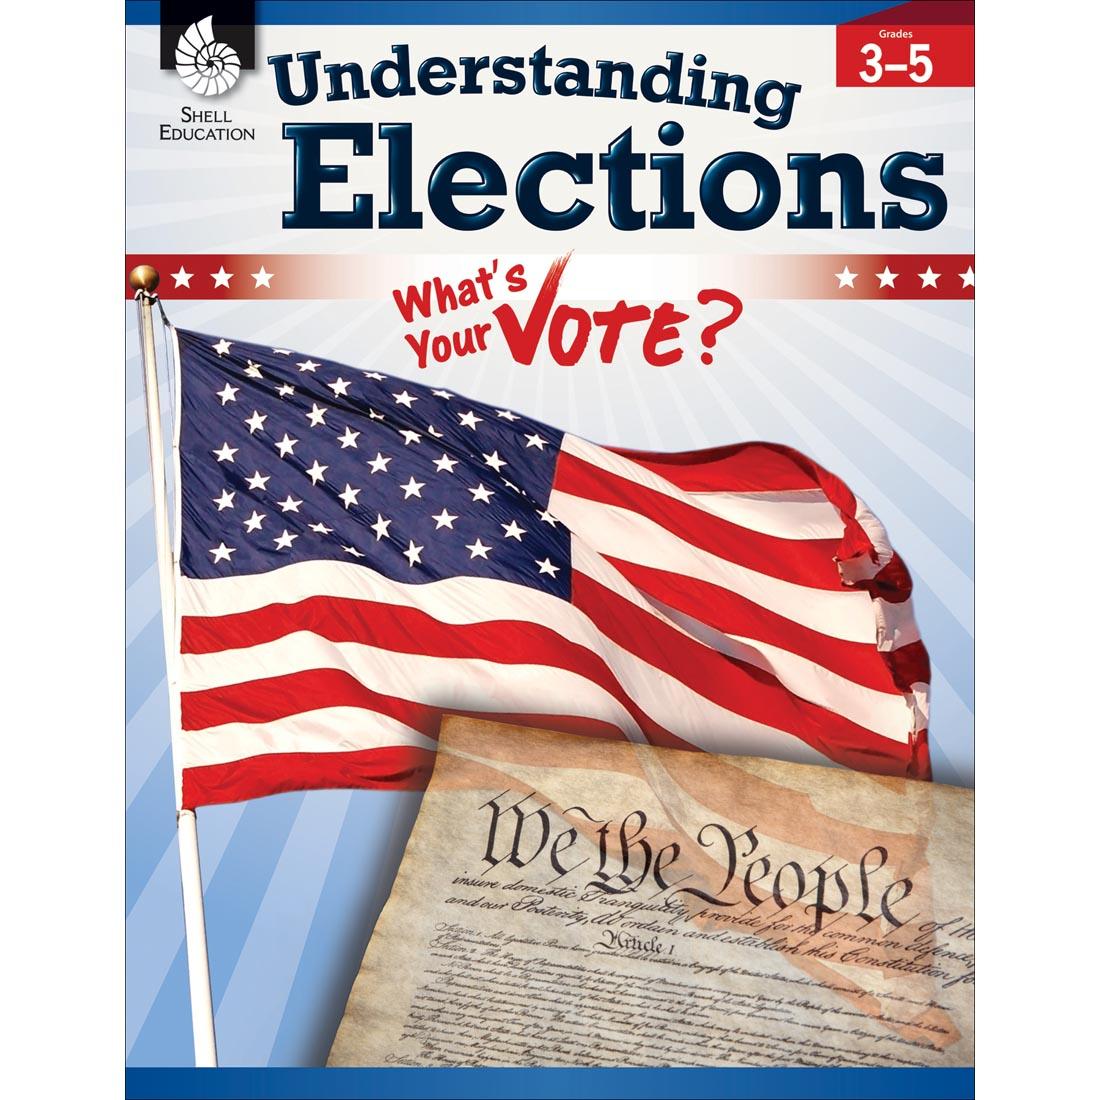 Understanding Elections Book for Grades 3-5